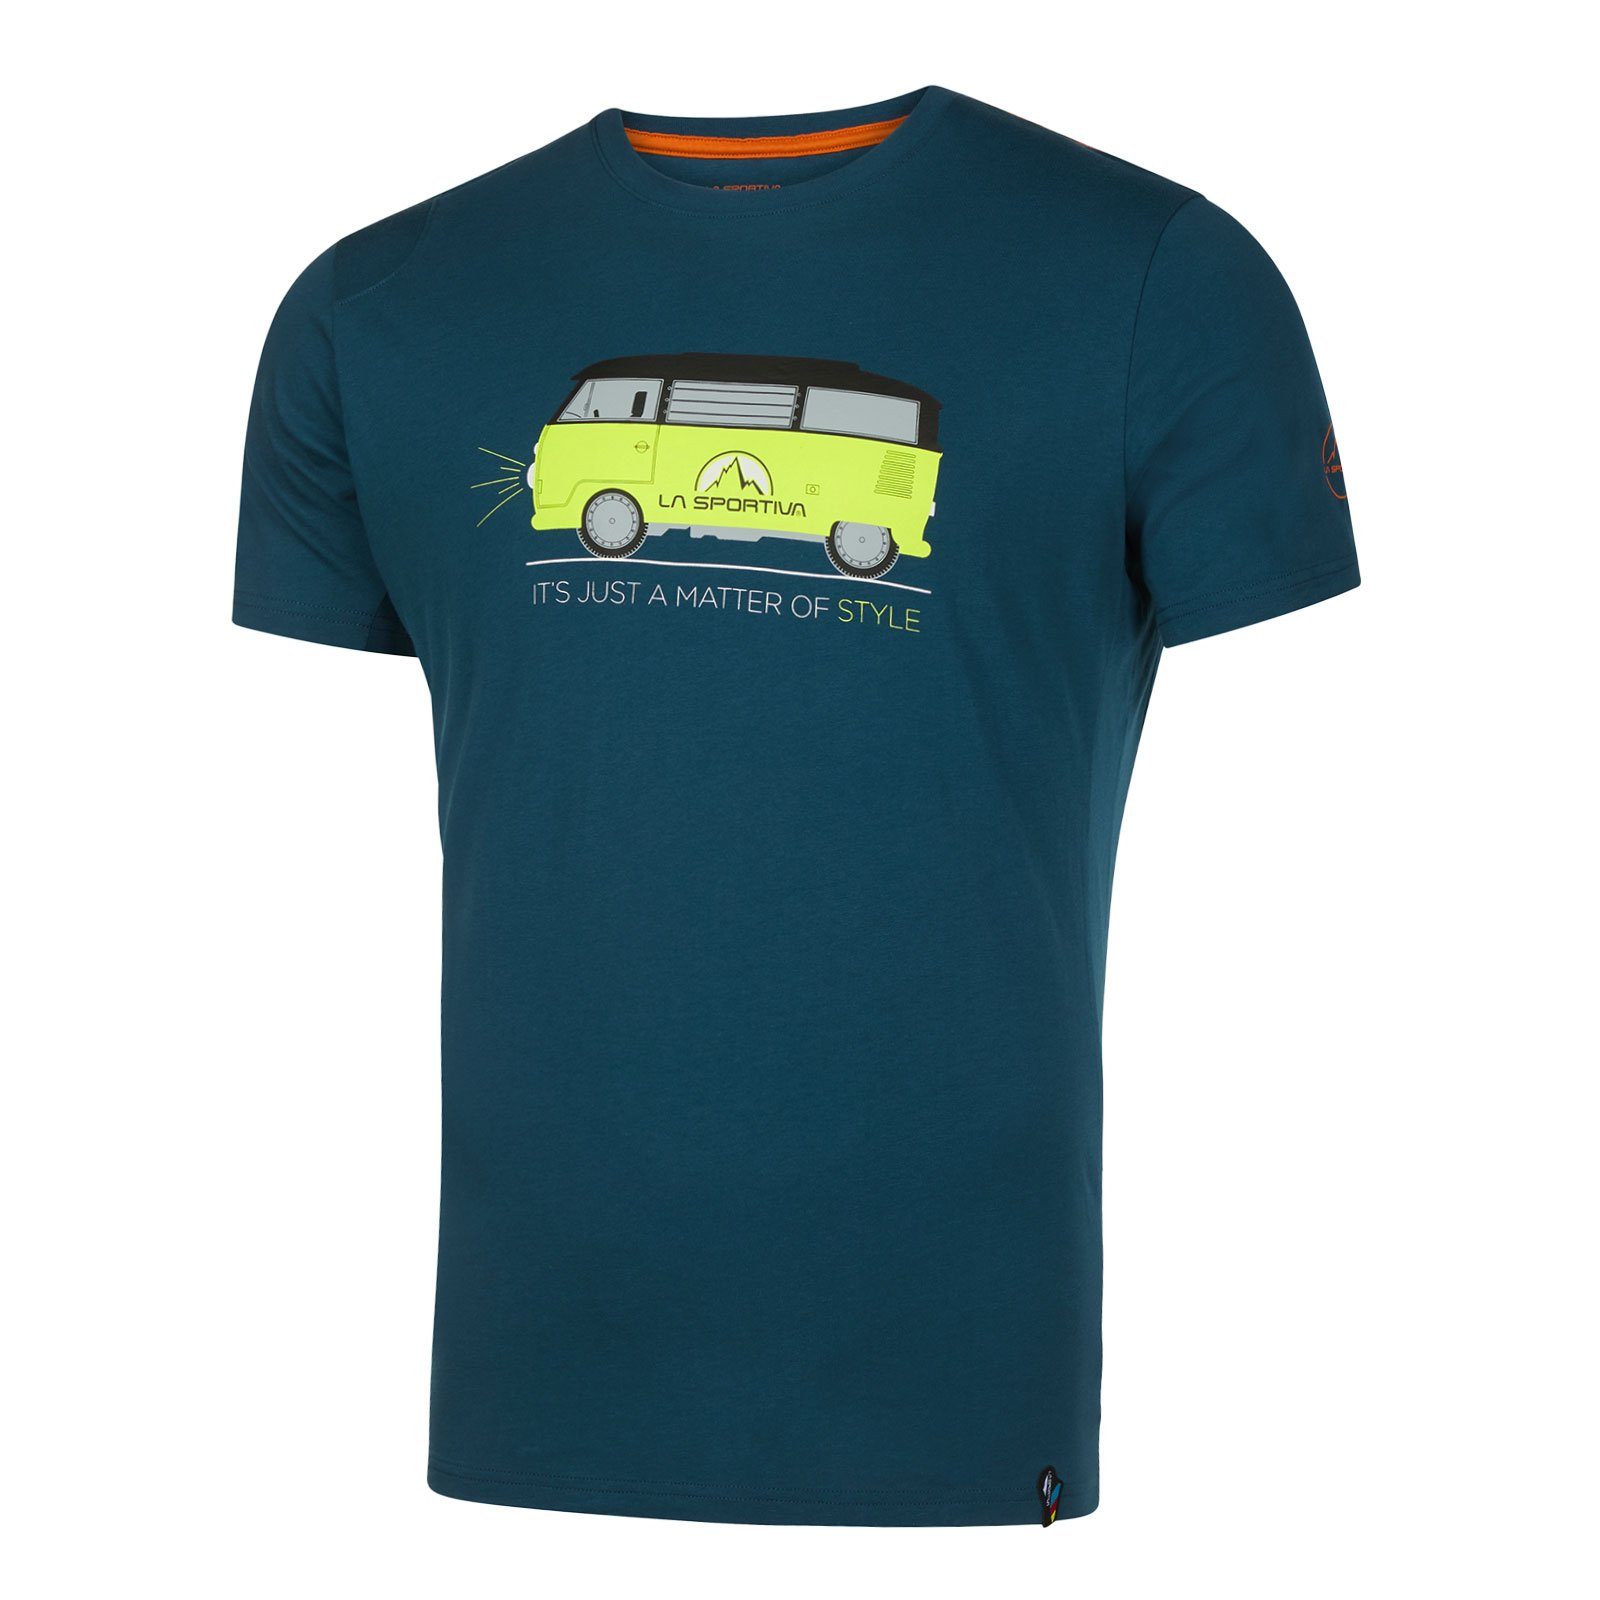 La Sportiva T-Shirt Van M aus 100% organischer Baumwolle 639639 storm blue | T-Shirts